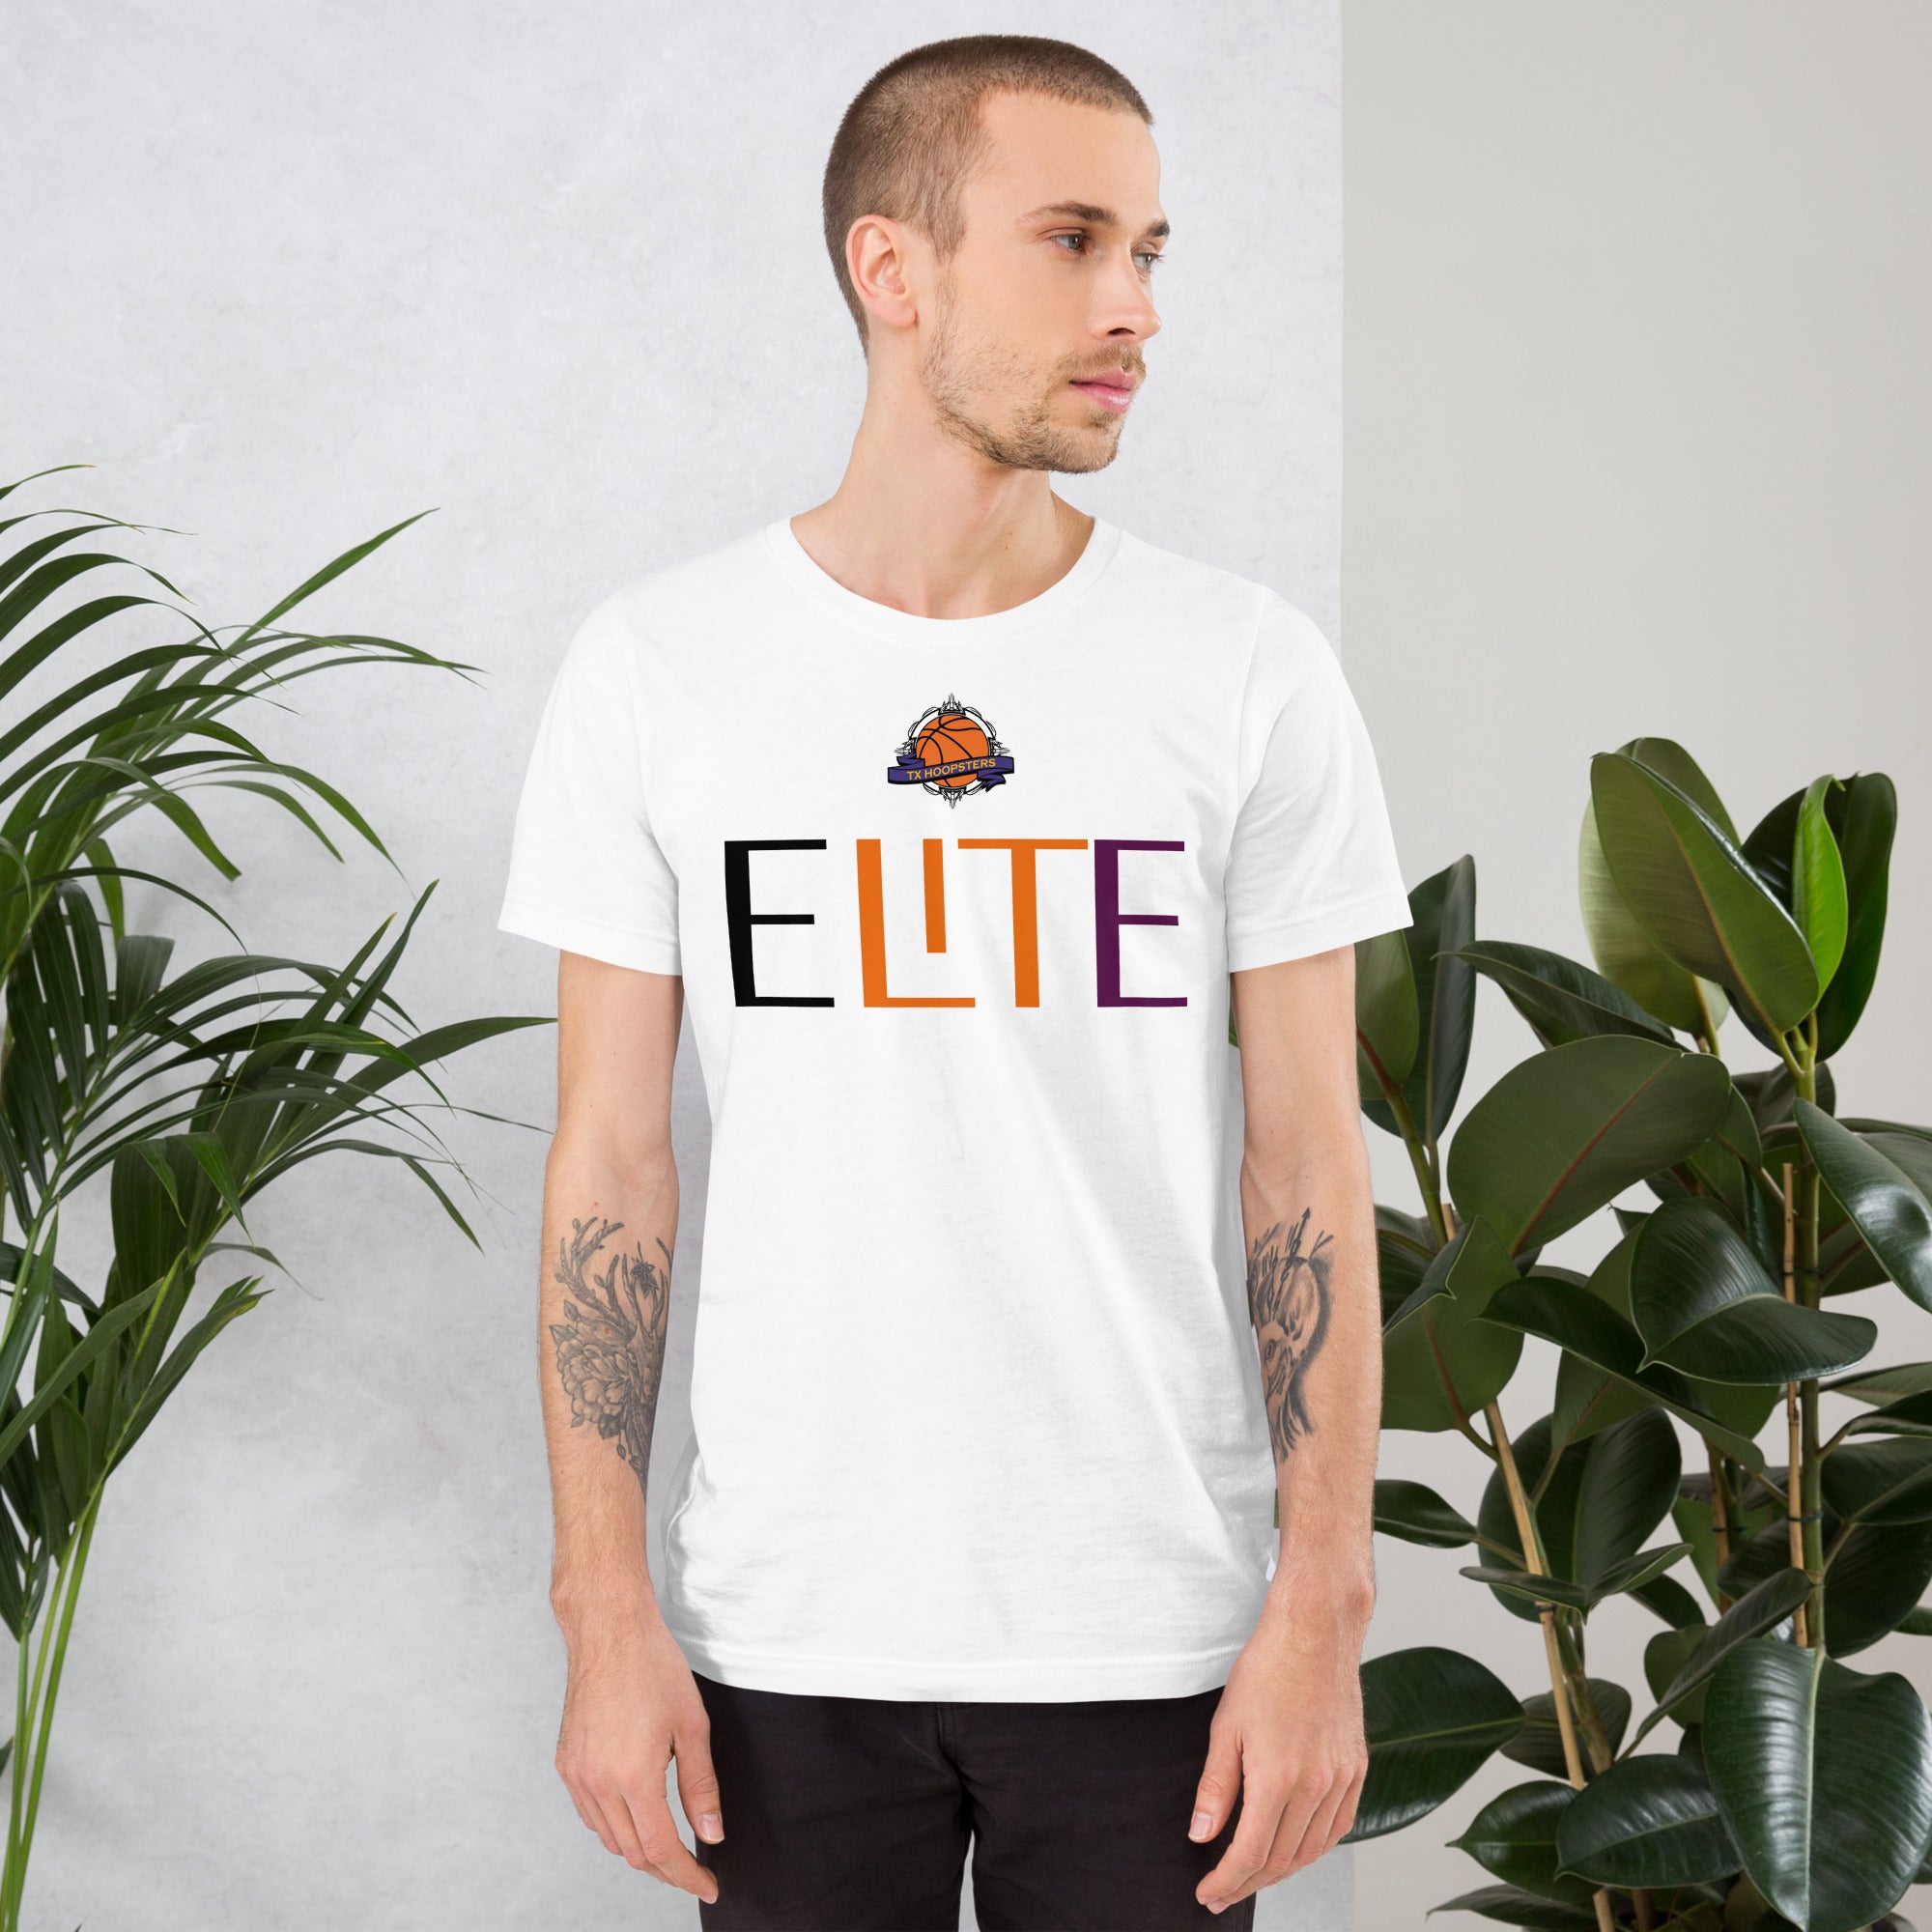 Unisex "Elite" Tee